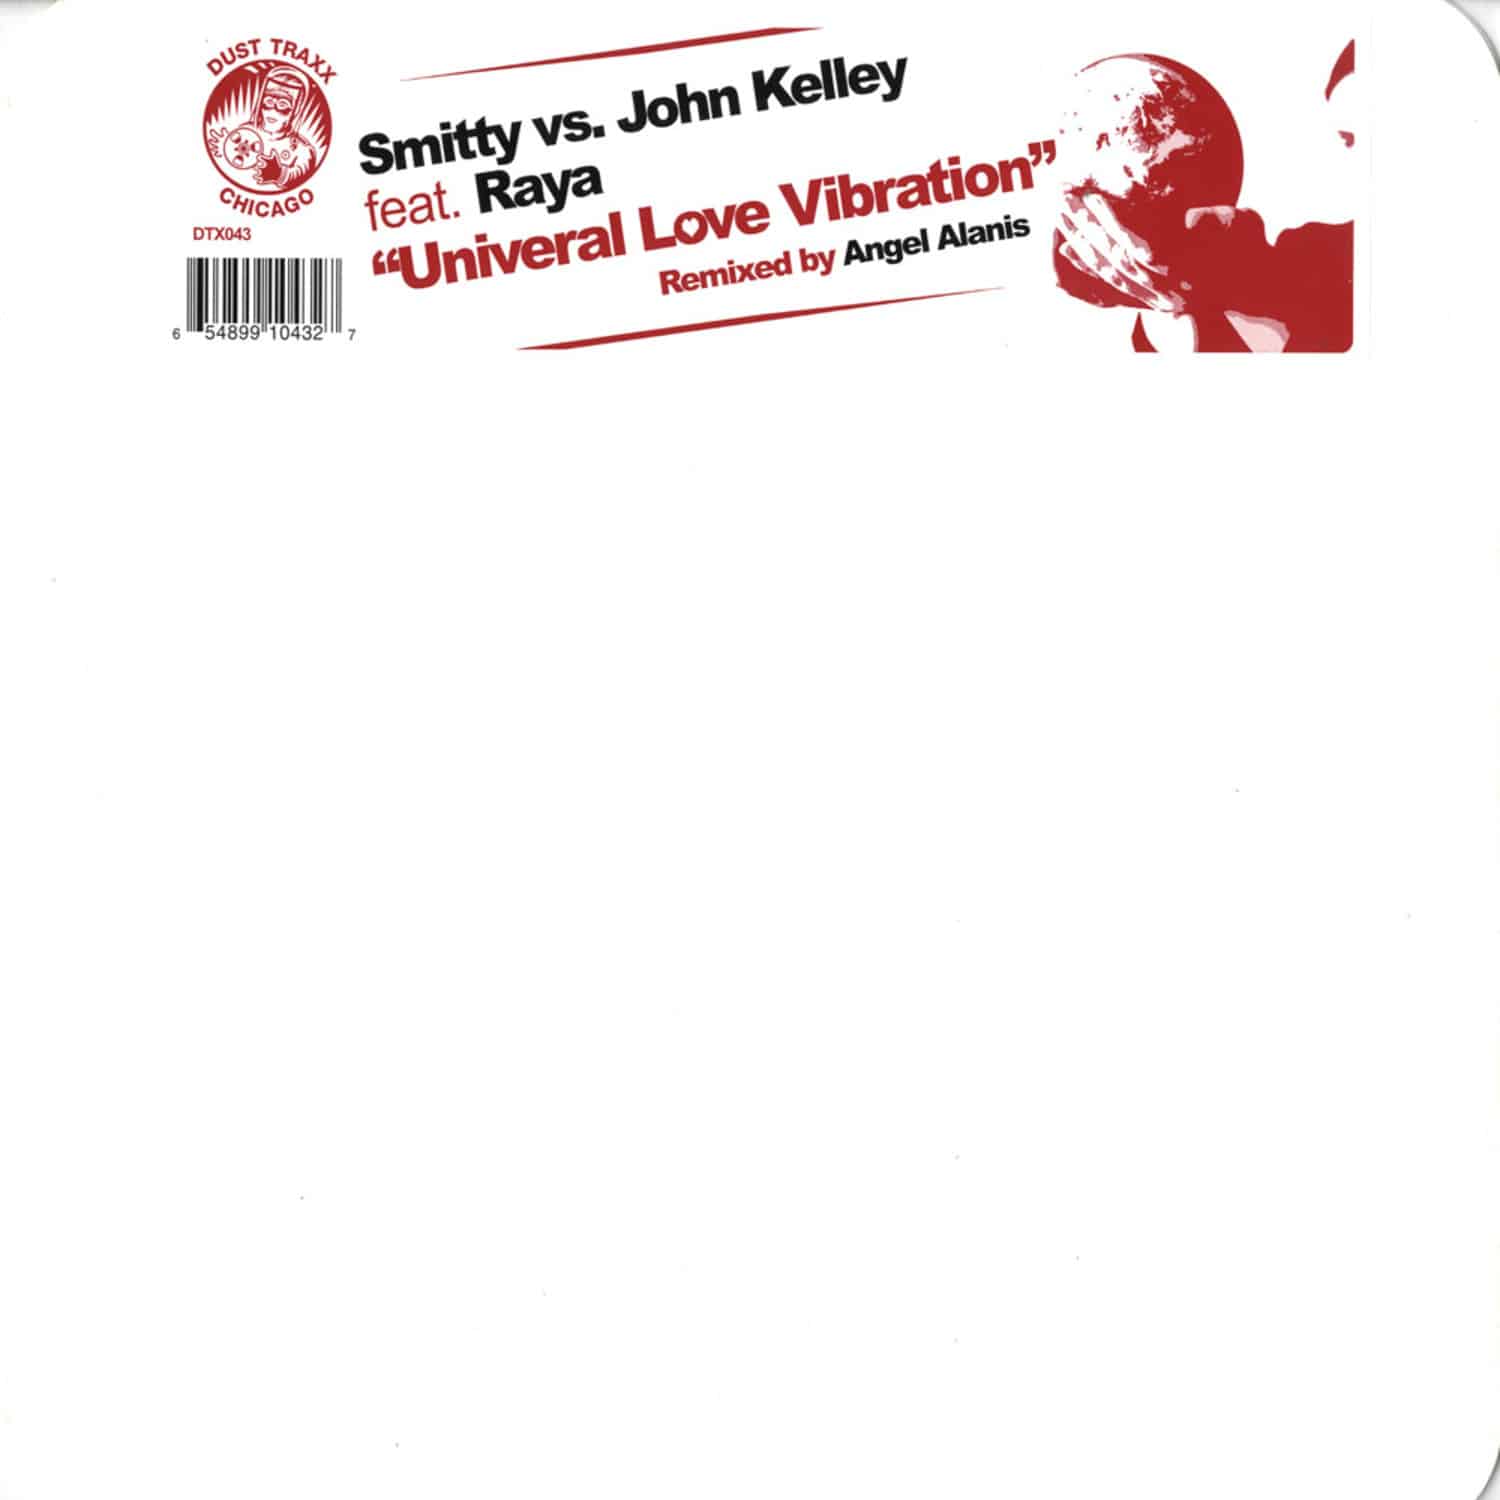 Smitty vs. John Kelley - UNIVERSAL LOVE